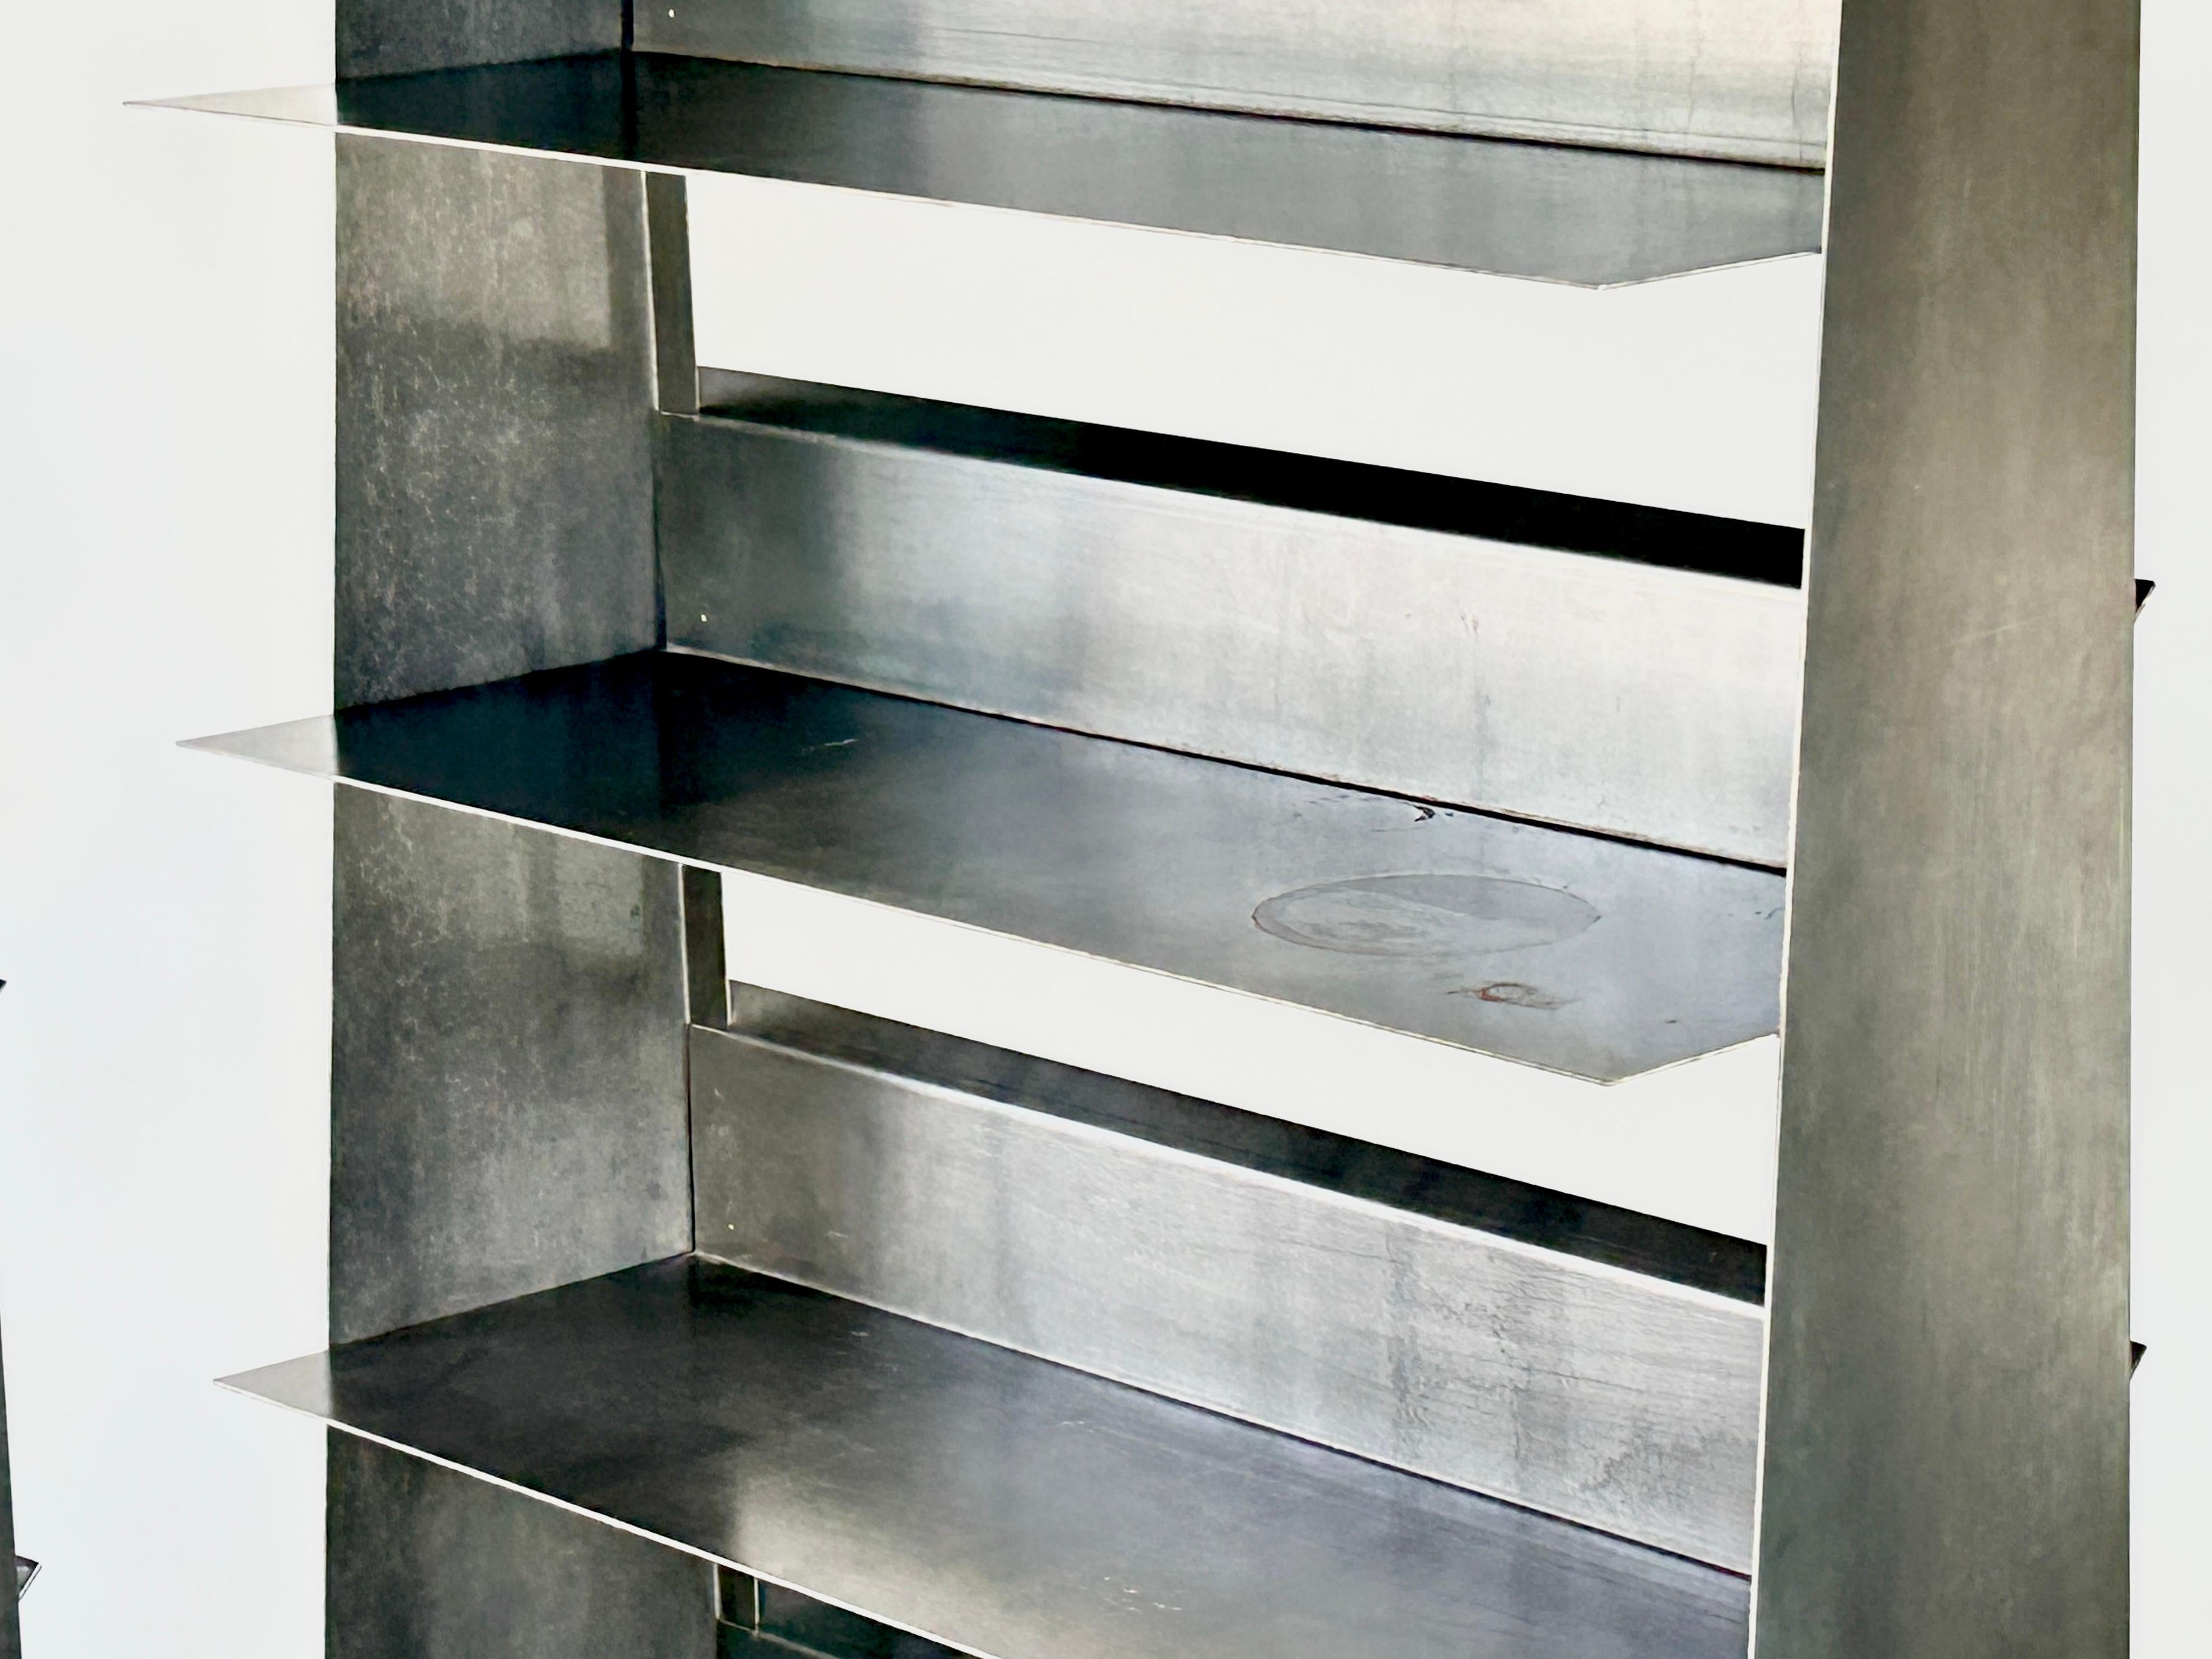 Two shelf units Patentregal design Wolfgang Laubersheimer, Pentagon Group 1988 10